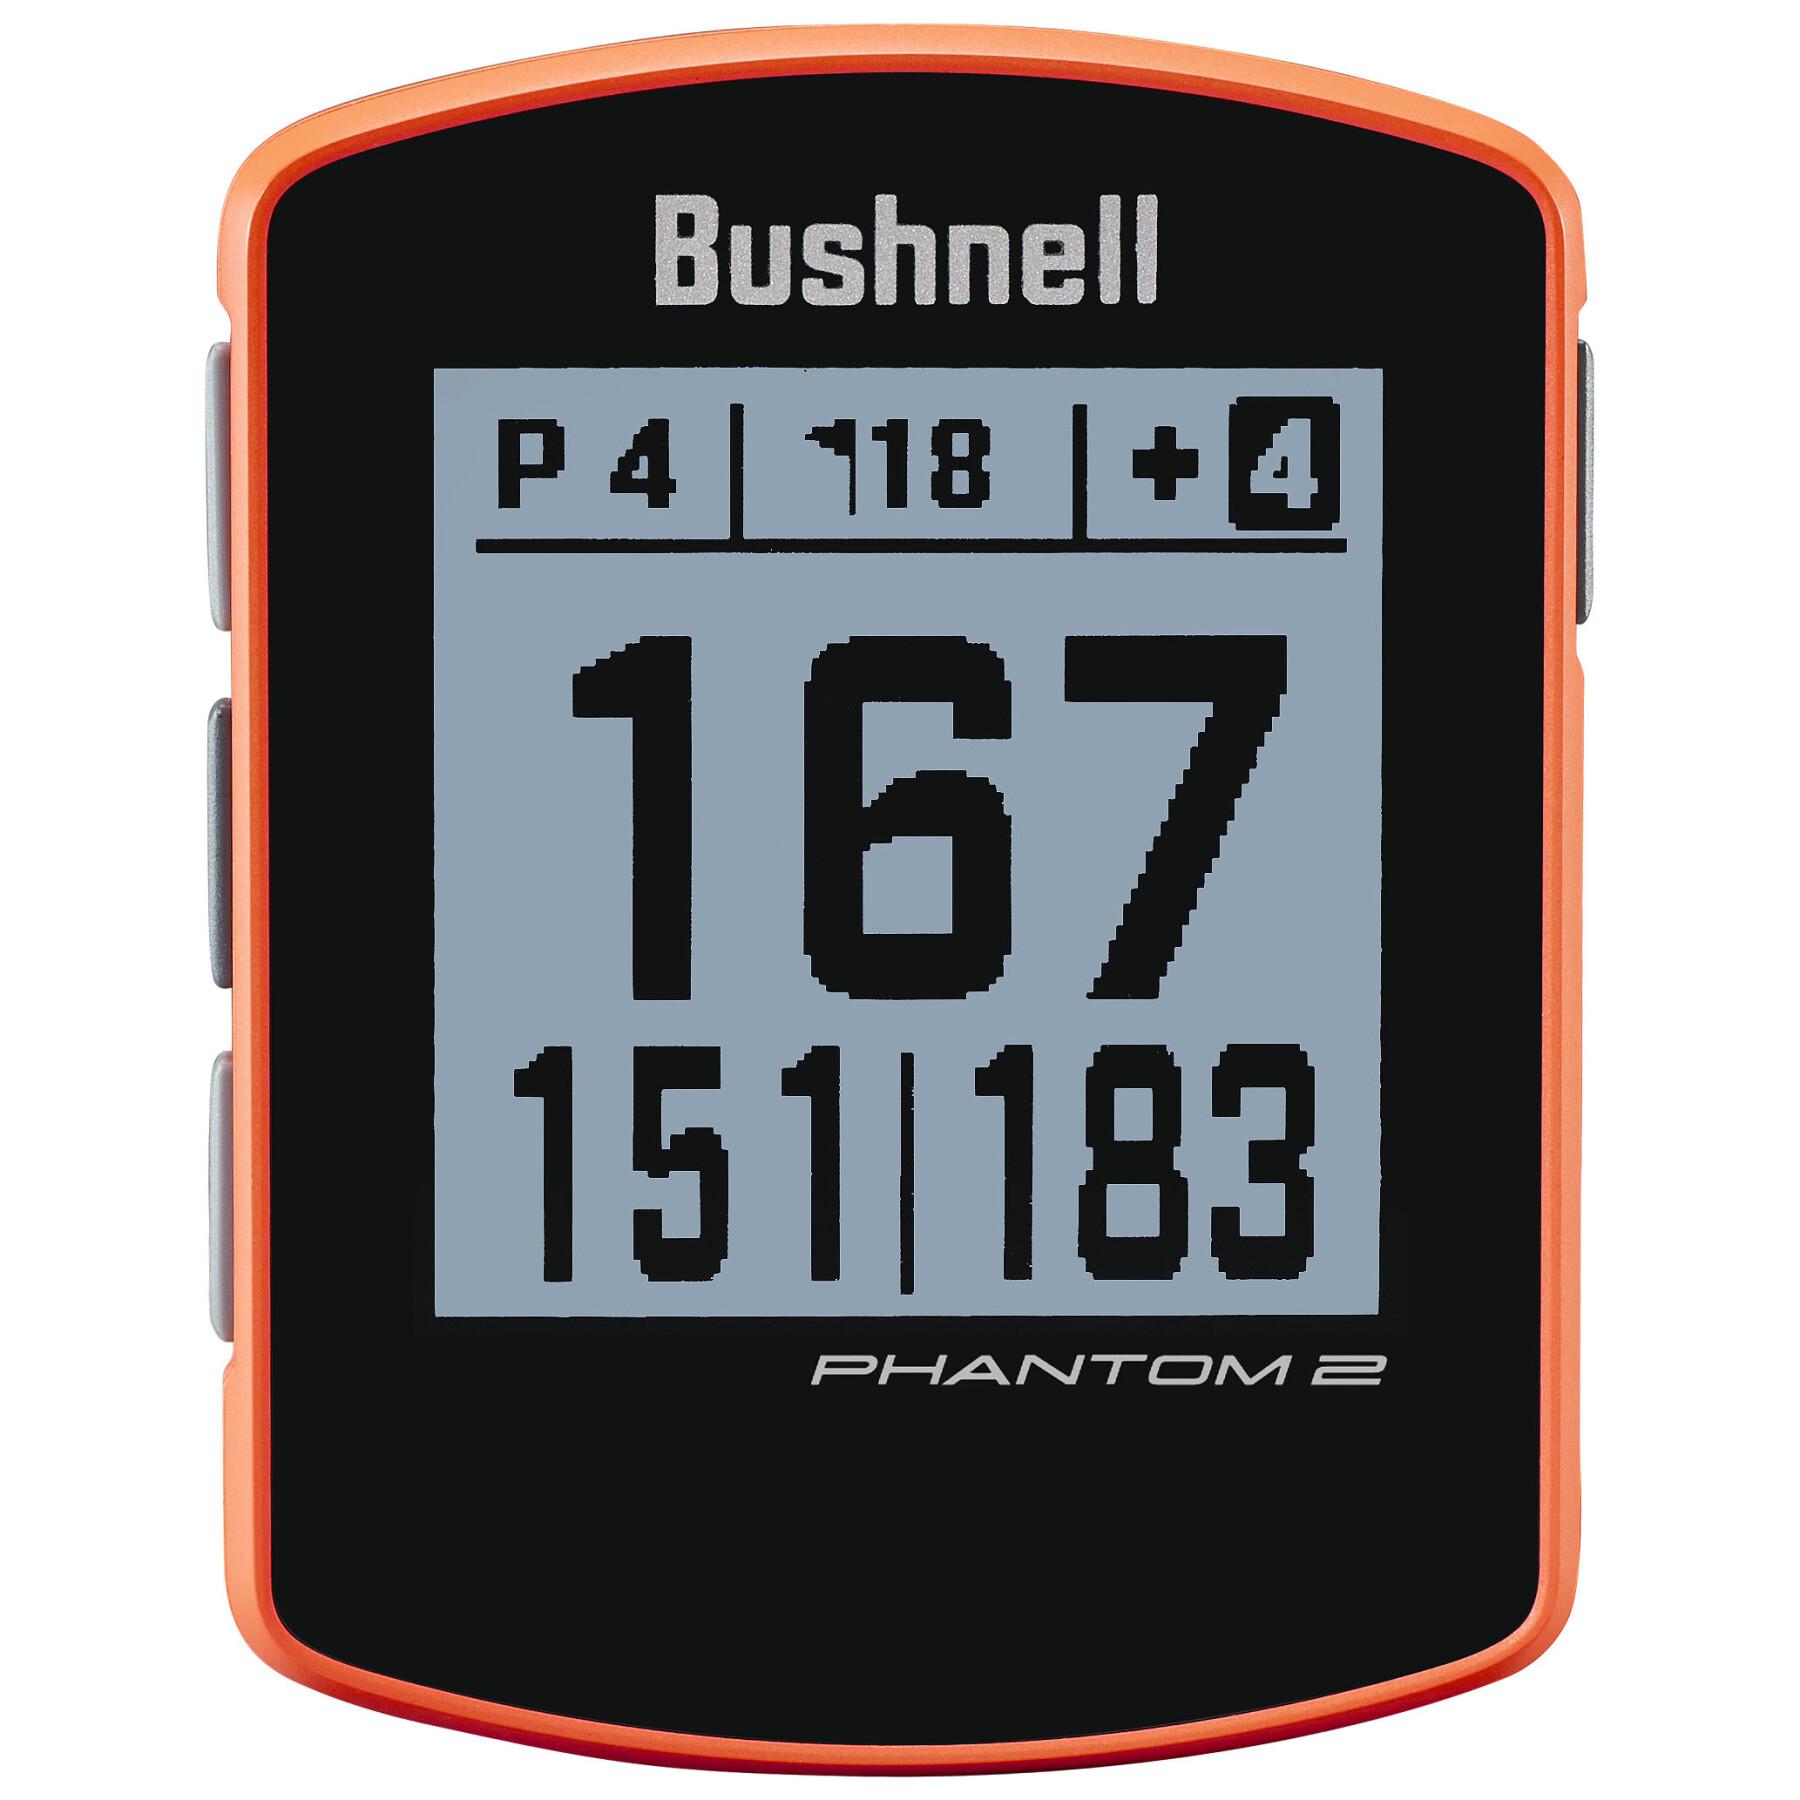 Bushnell golf phantom 2 gps horloge